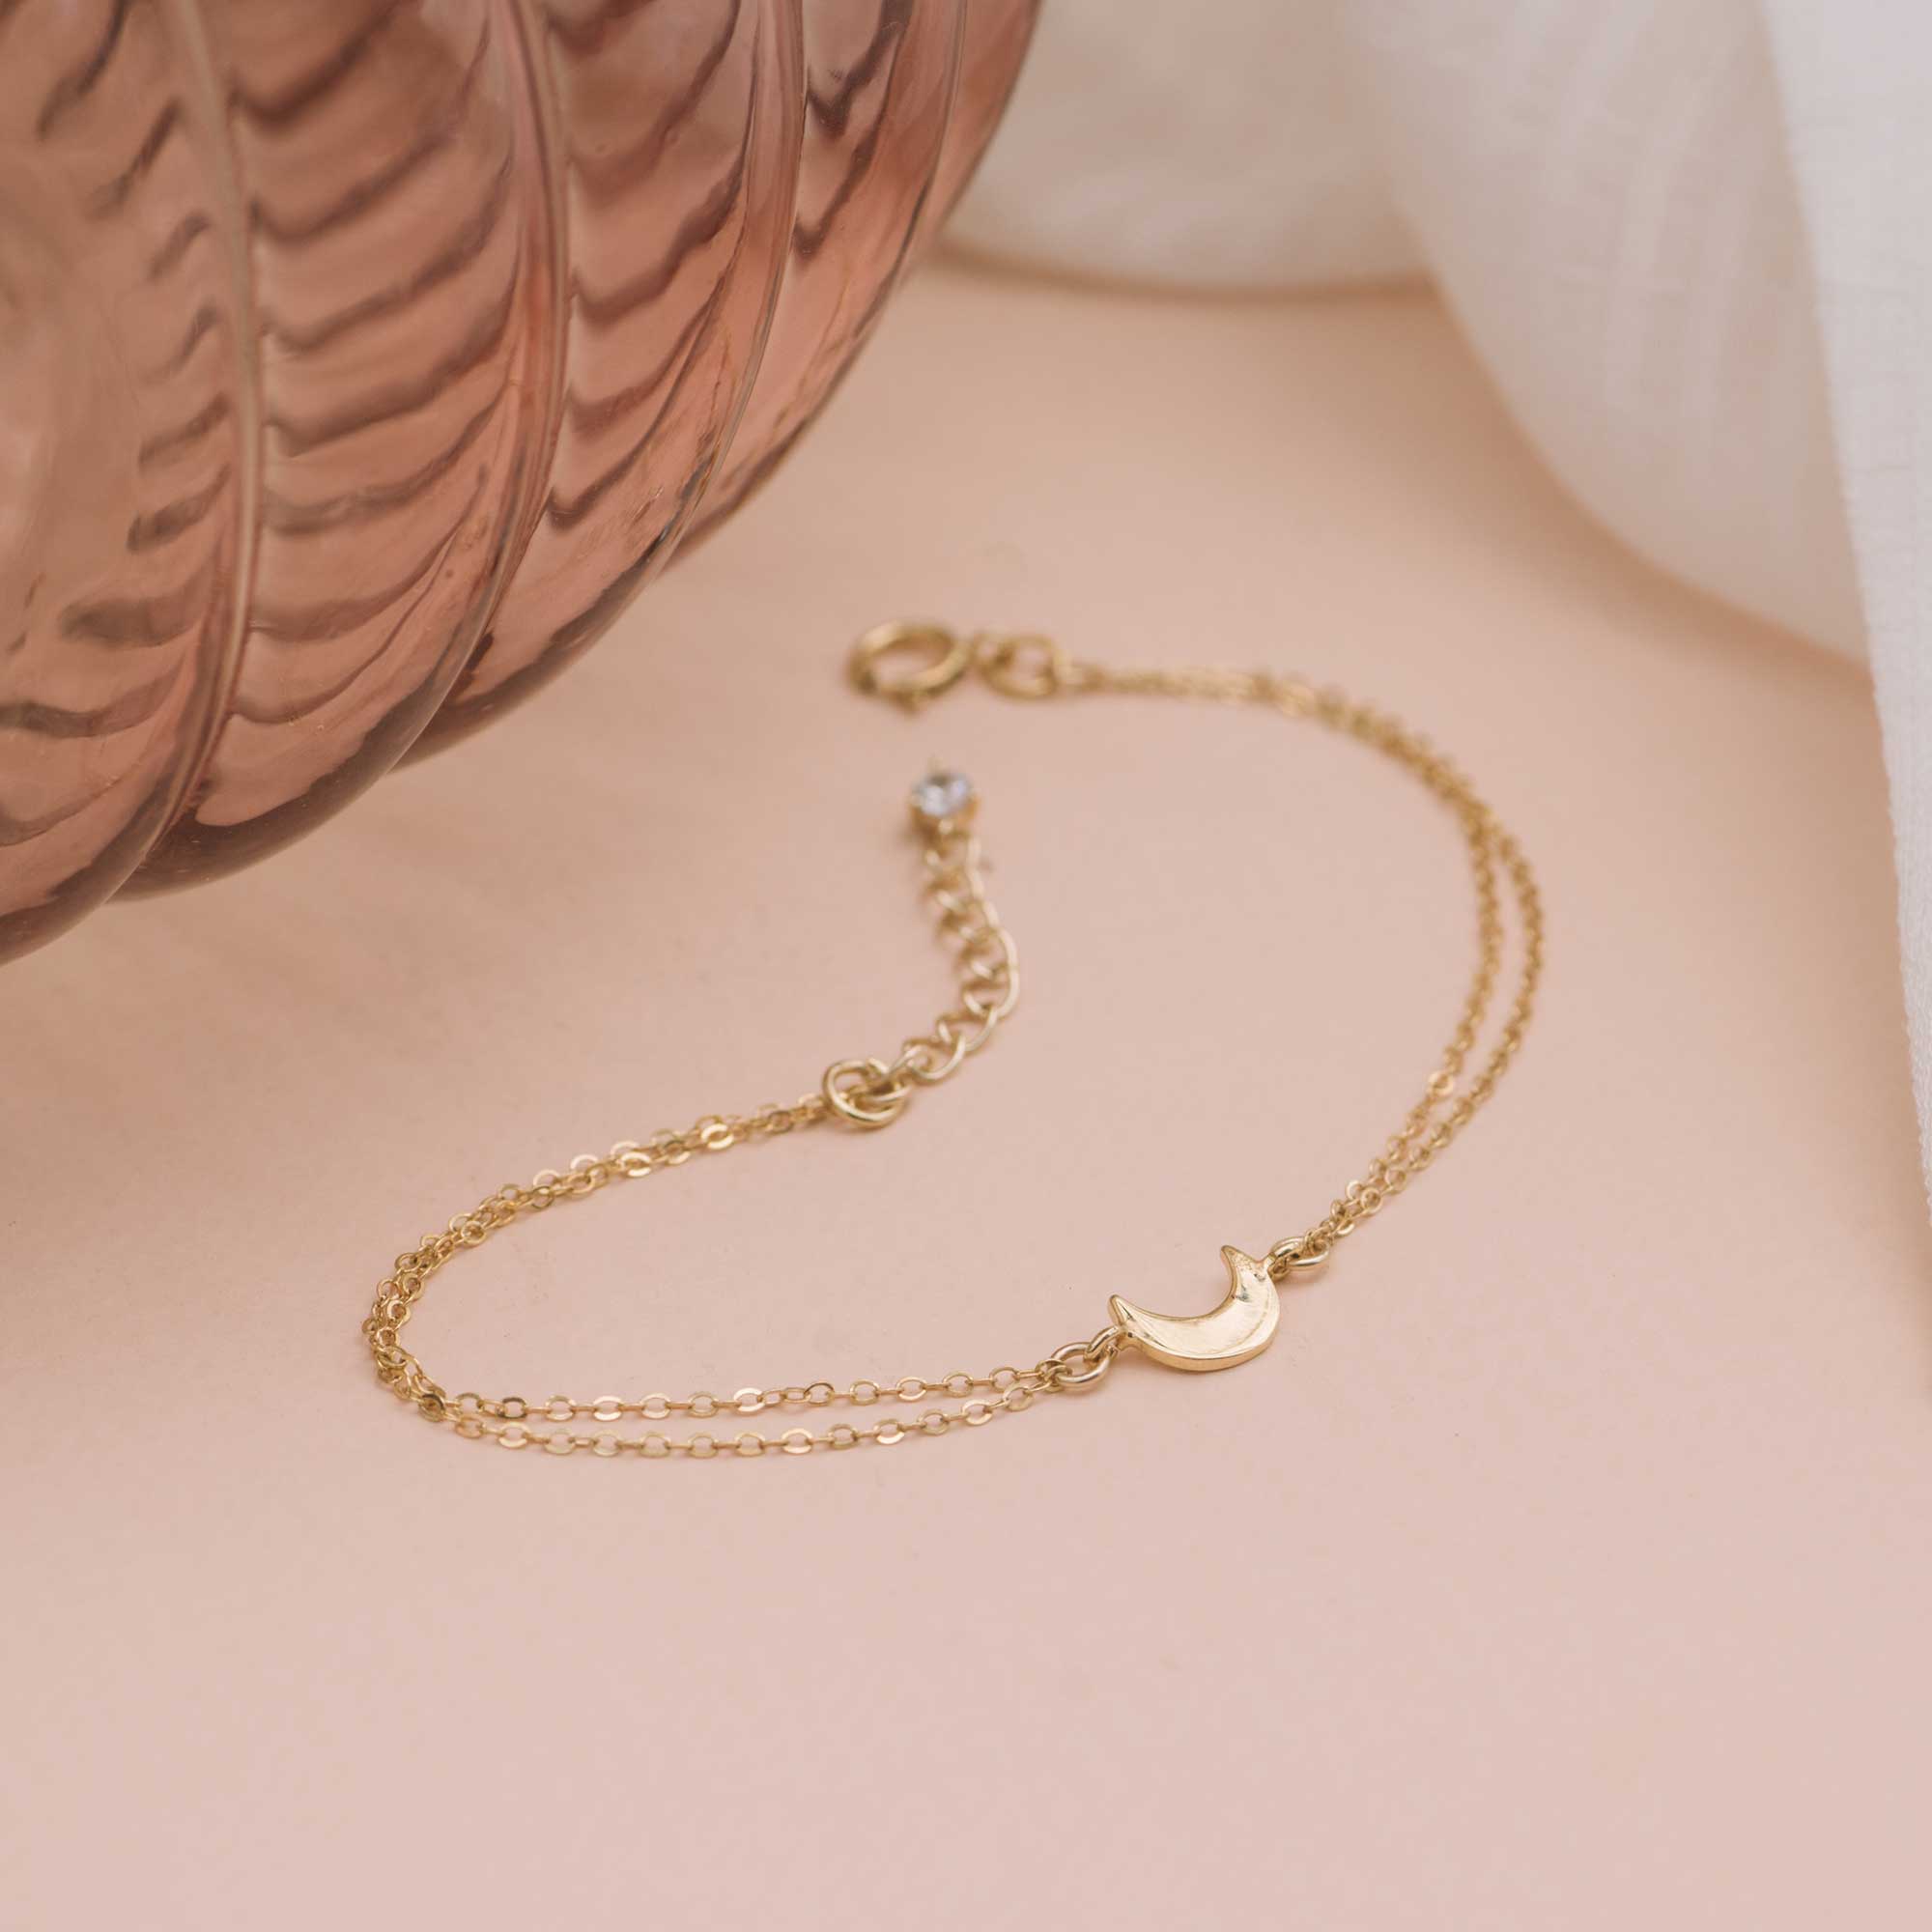 sandrine devost jewelry moon crescent bracelet 14K gold filled perfect gift for her